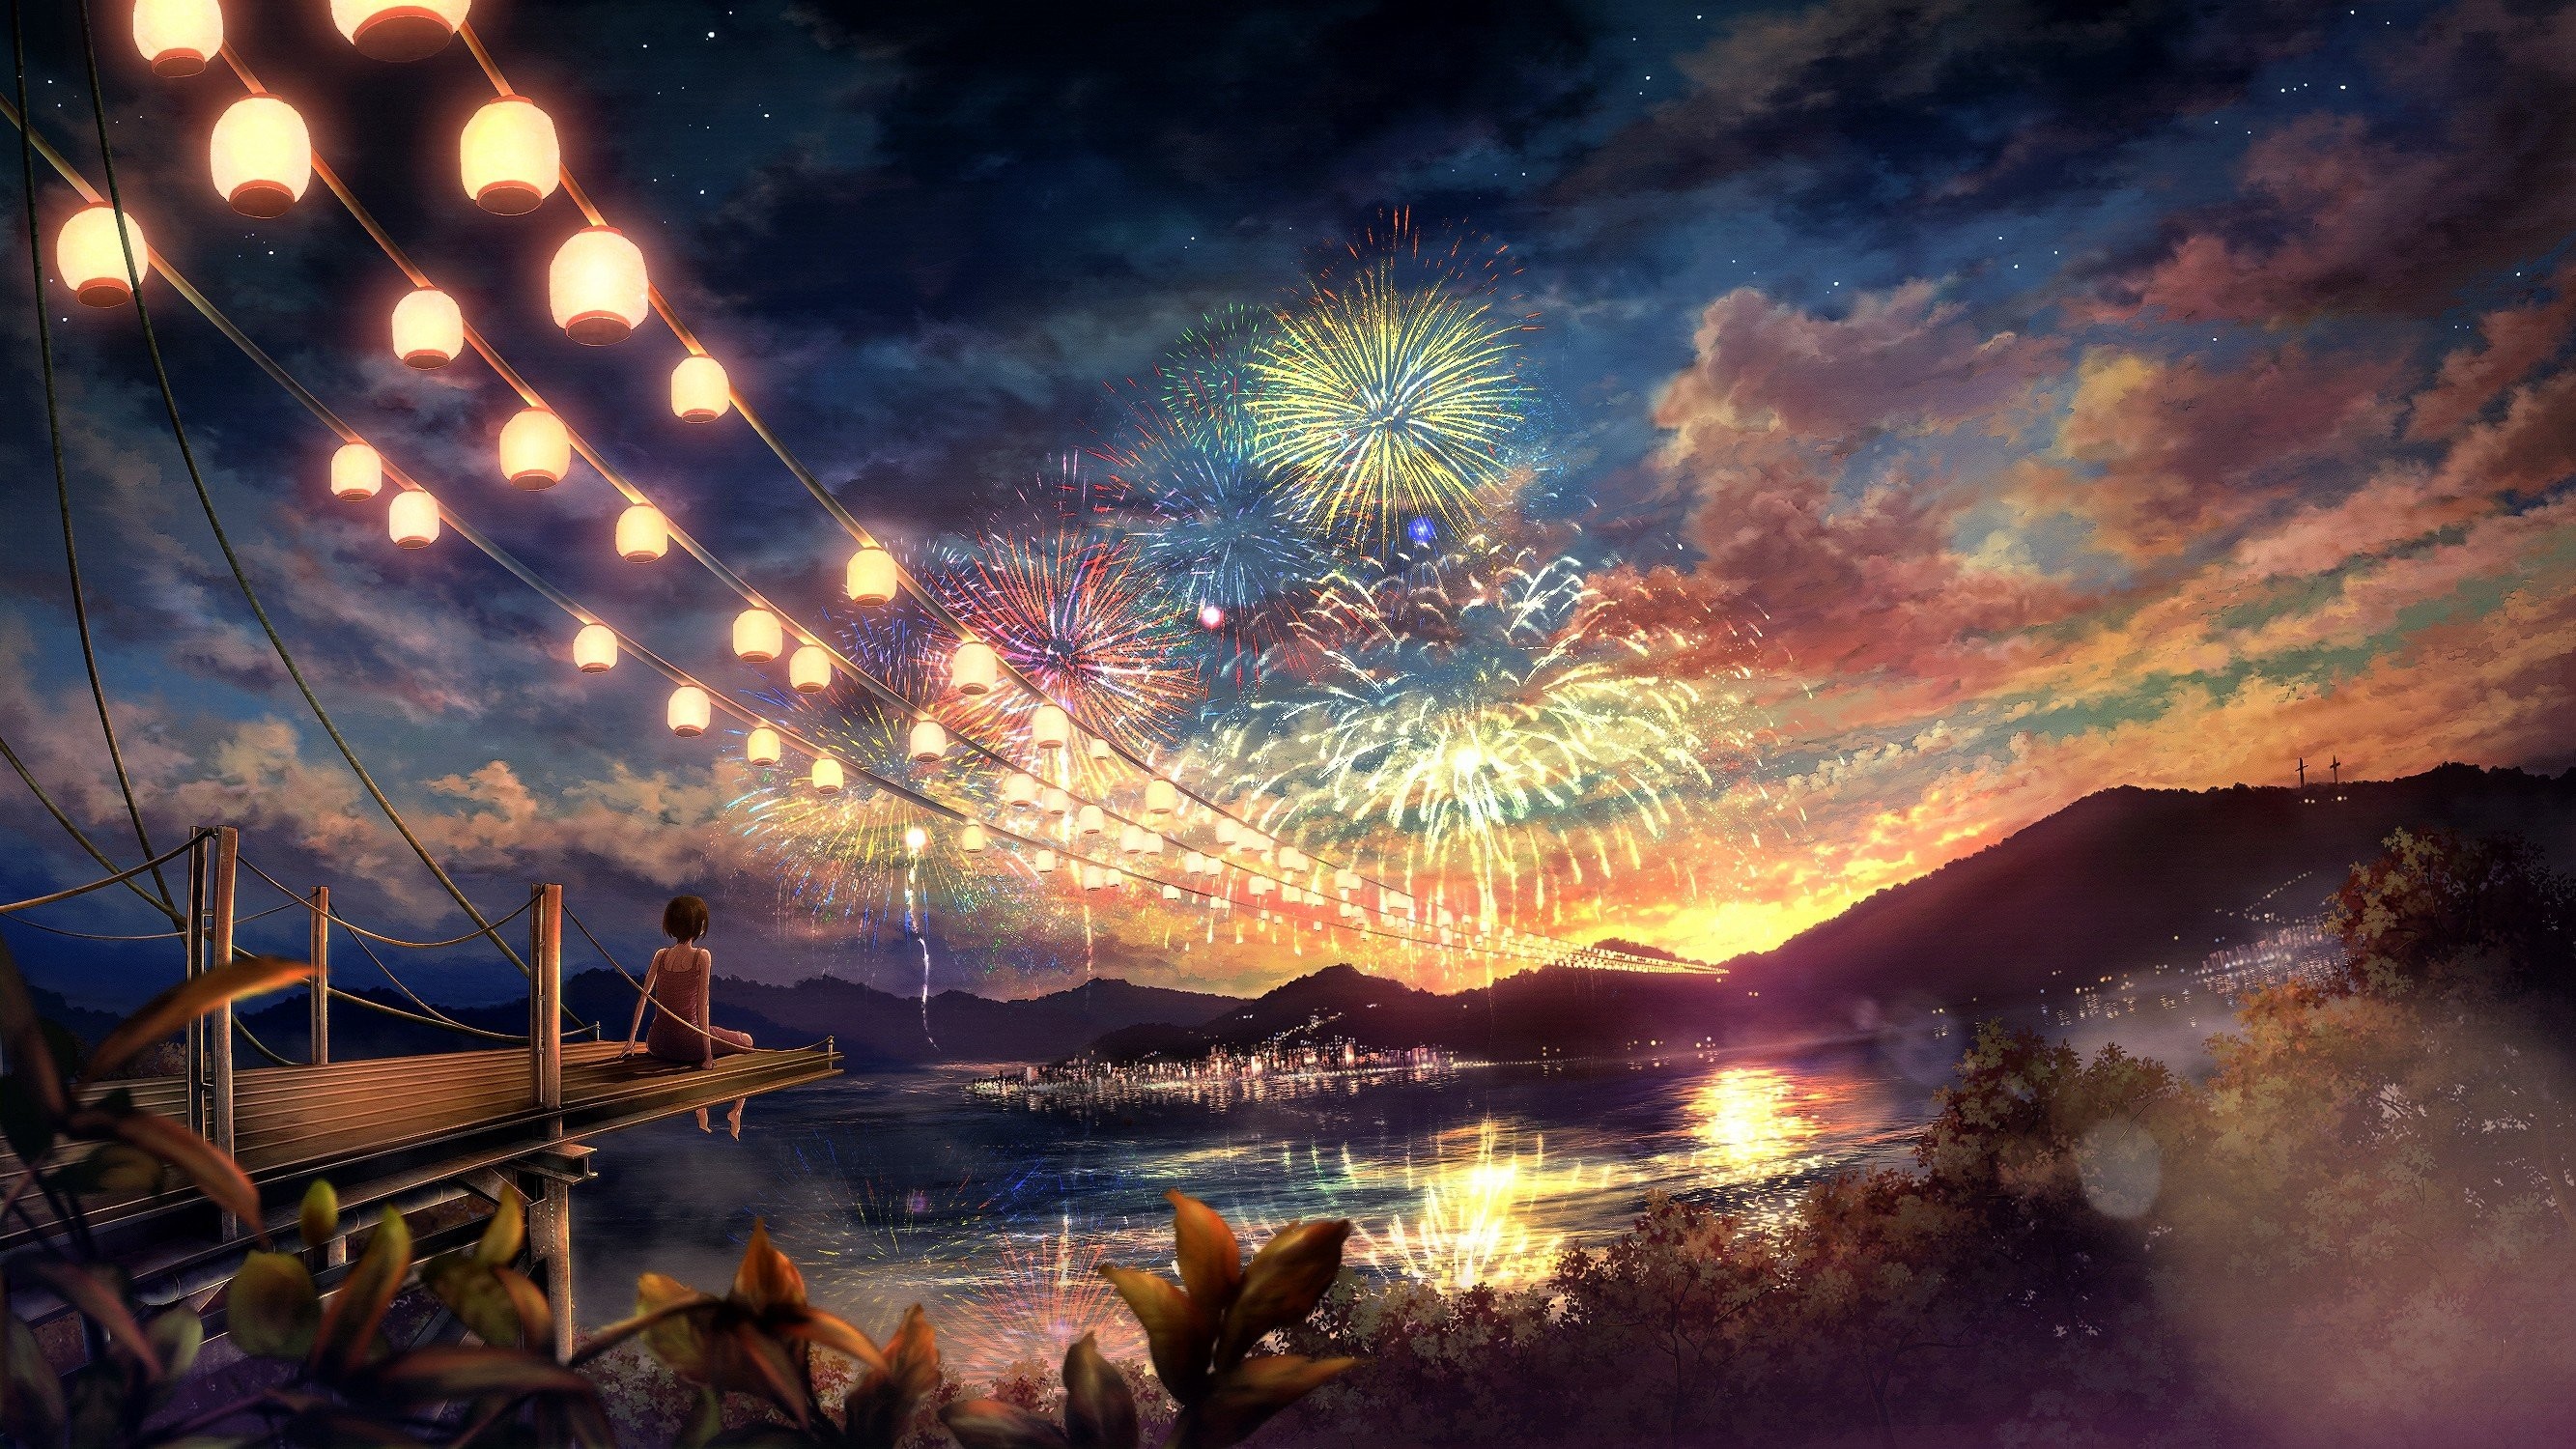 Shrine Gate Night Sky Anime Scenery 4K Wallpaper 62588